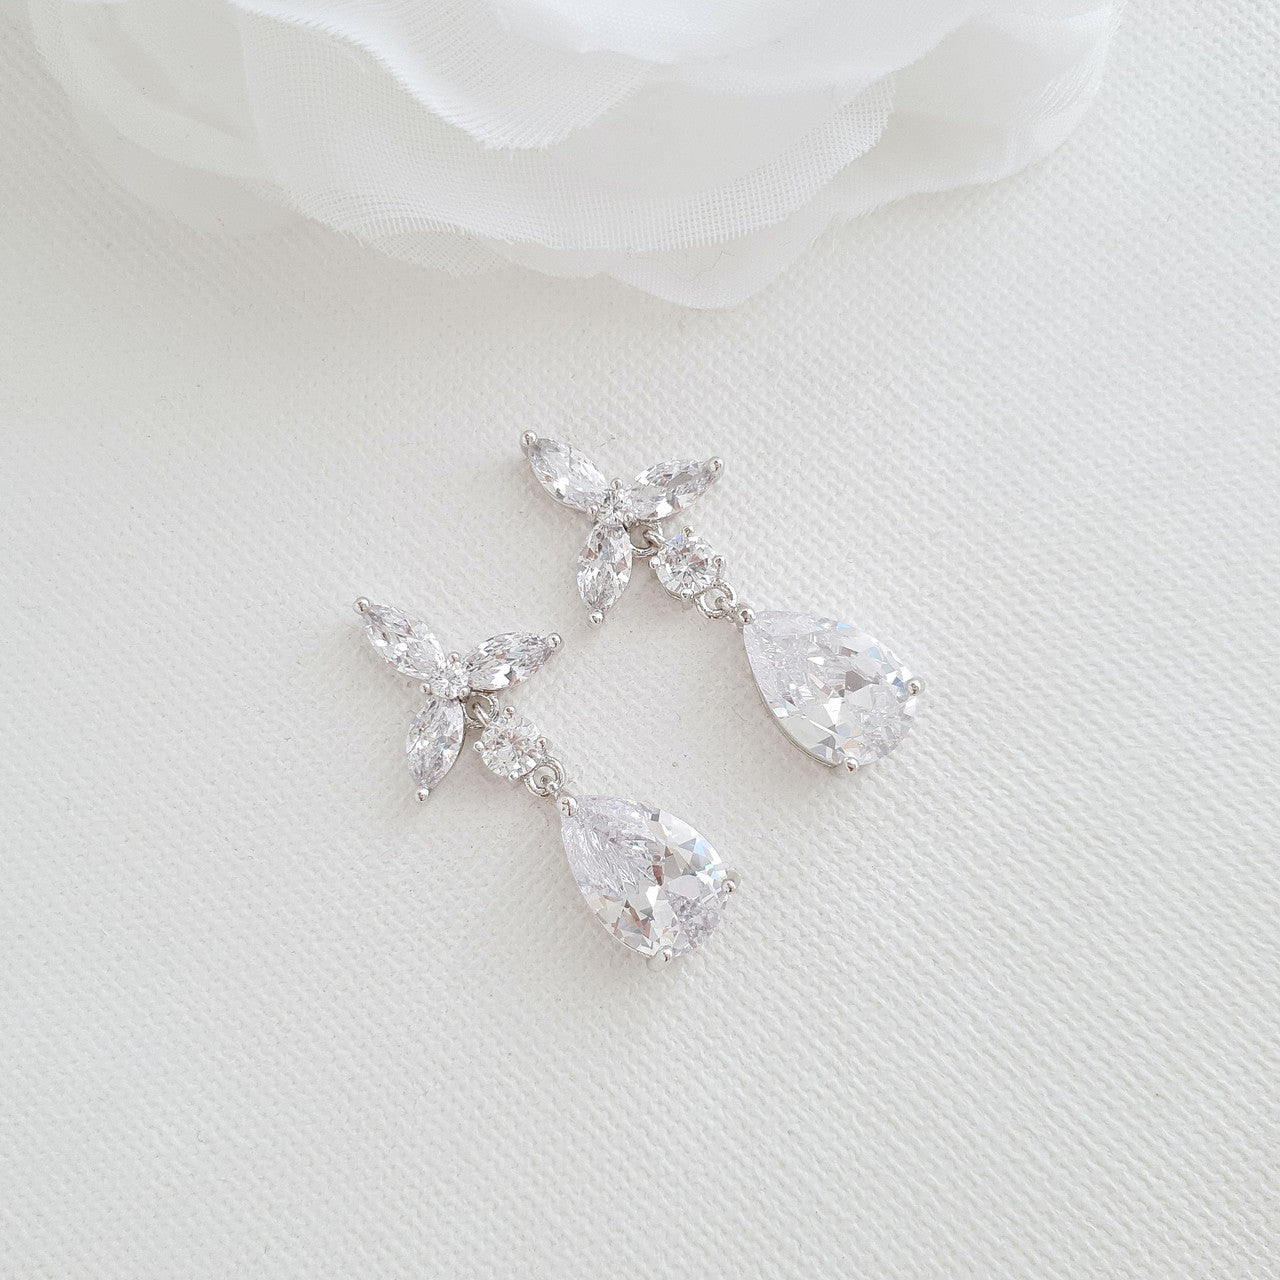 Floral Bridal Earrings in CZ Crystals- Poetry Designs